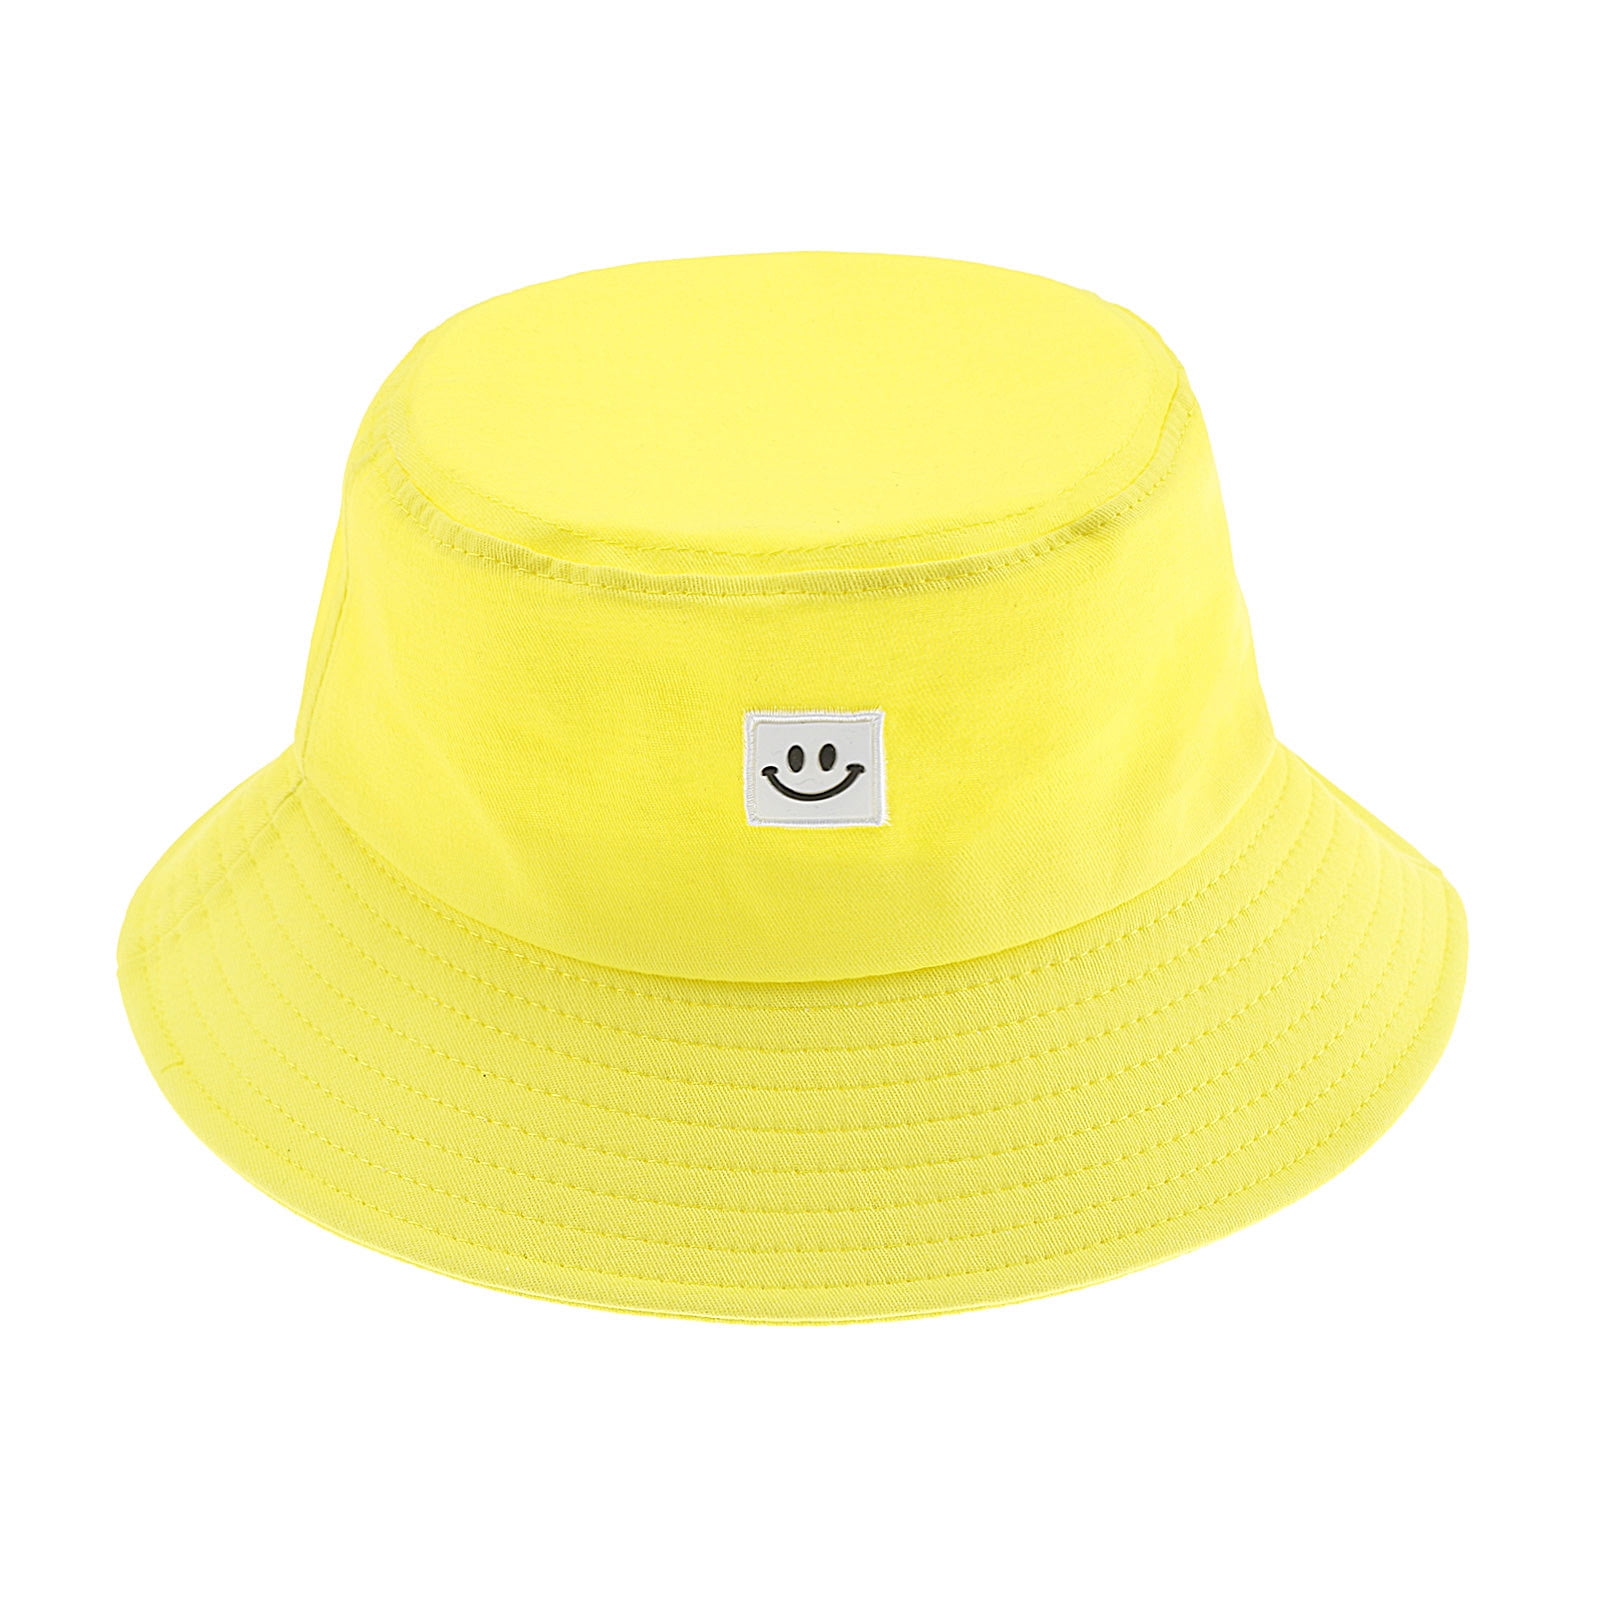 UMIPUBO Bucket Sun Hat Women Hat Fisherman Hat Smile Face Sunbonnet Hip Pop Casual Fedoras Outdoor Beach Cap